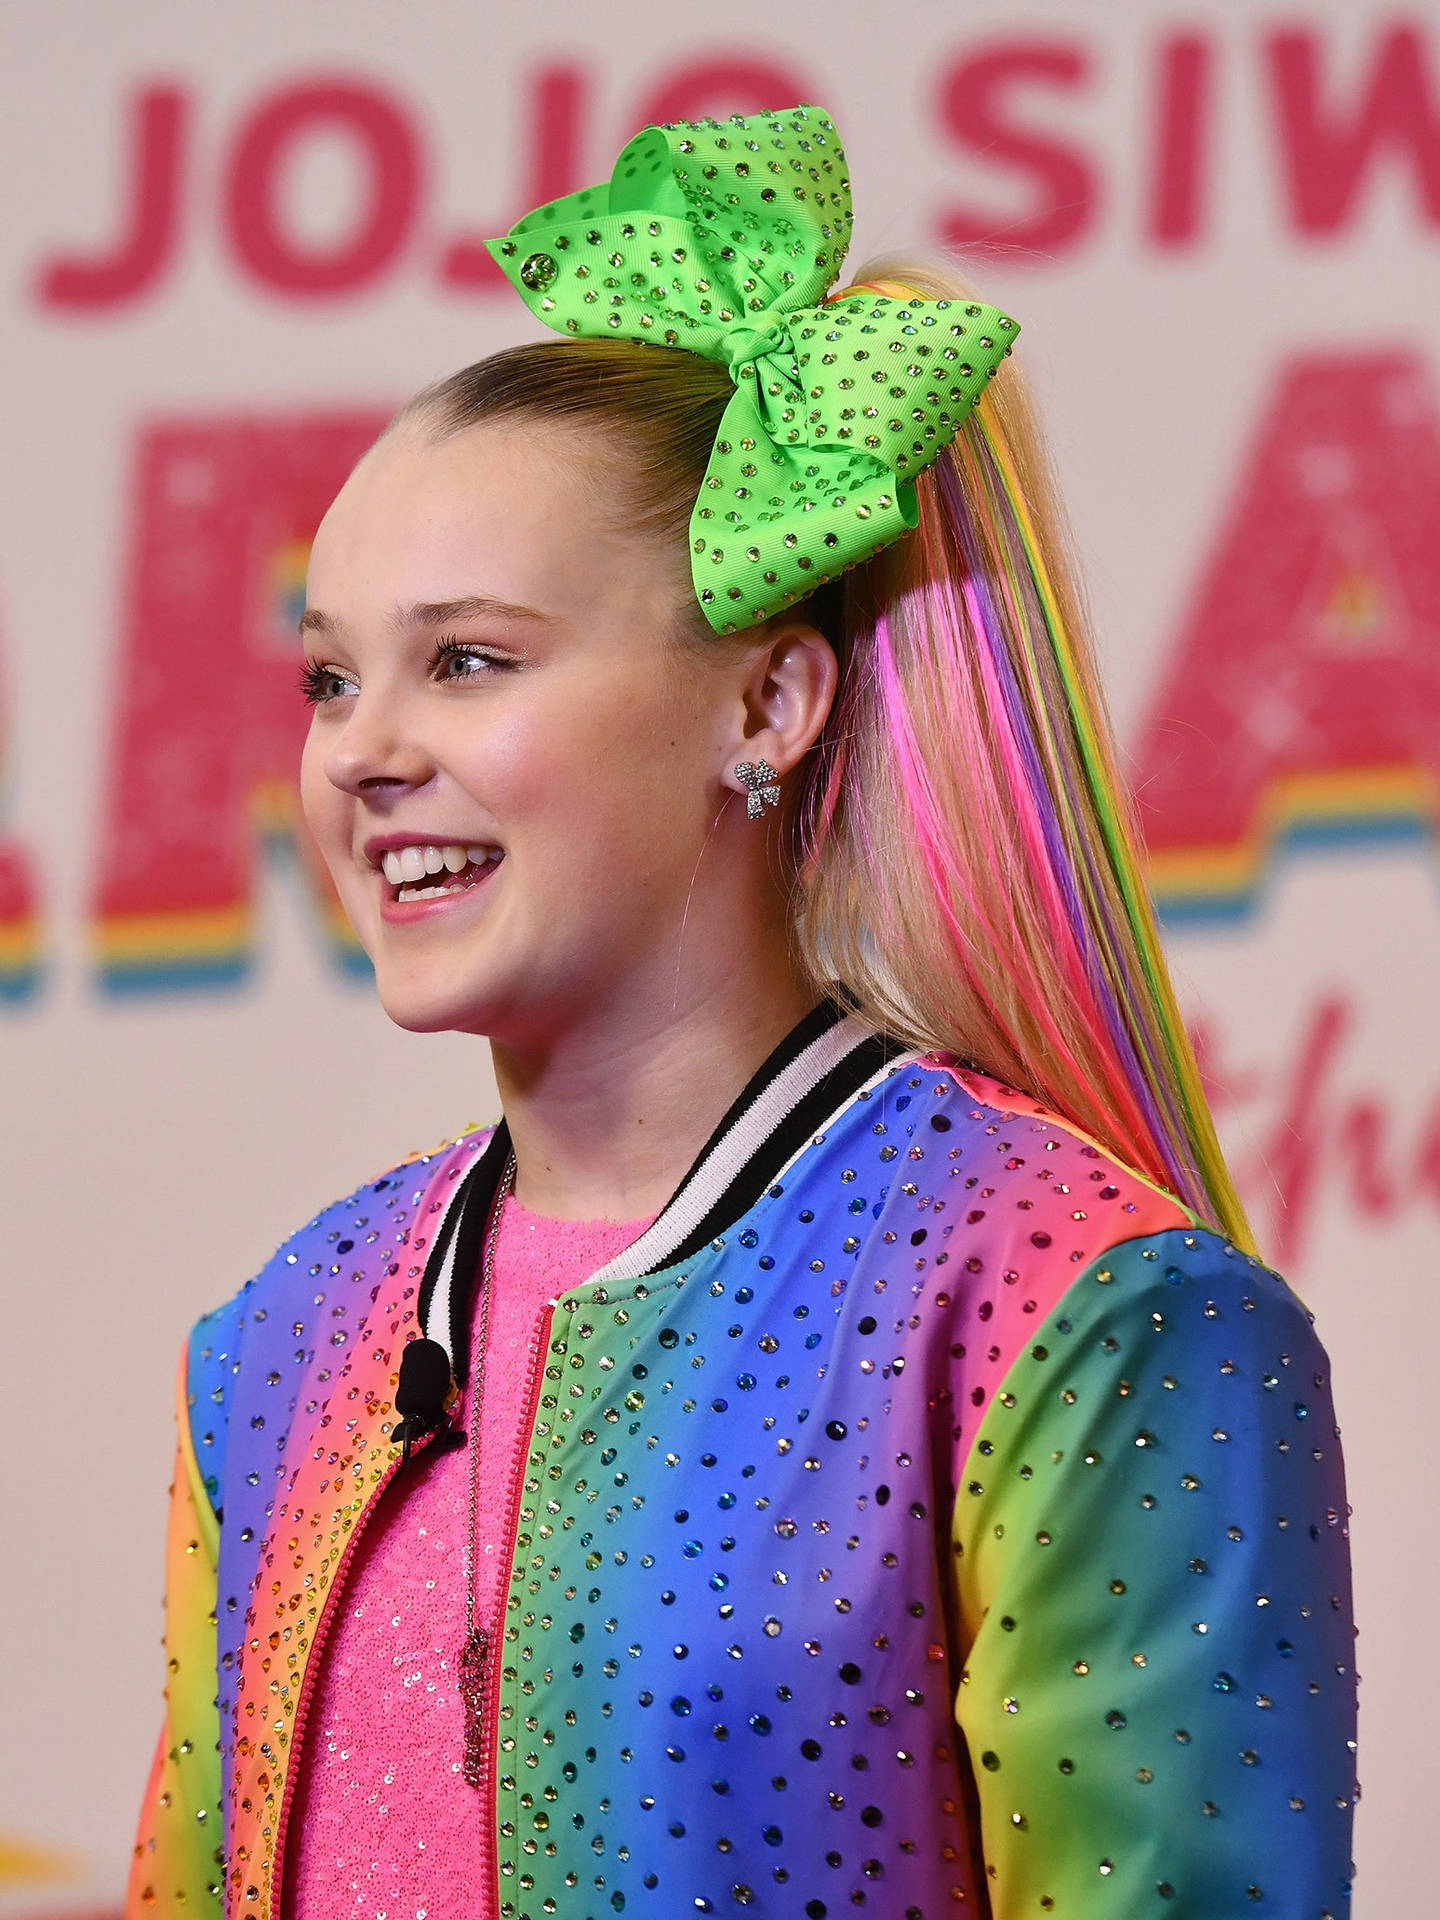 Jojo Siwa Wearing Rainbow Jacket Background